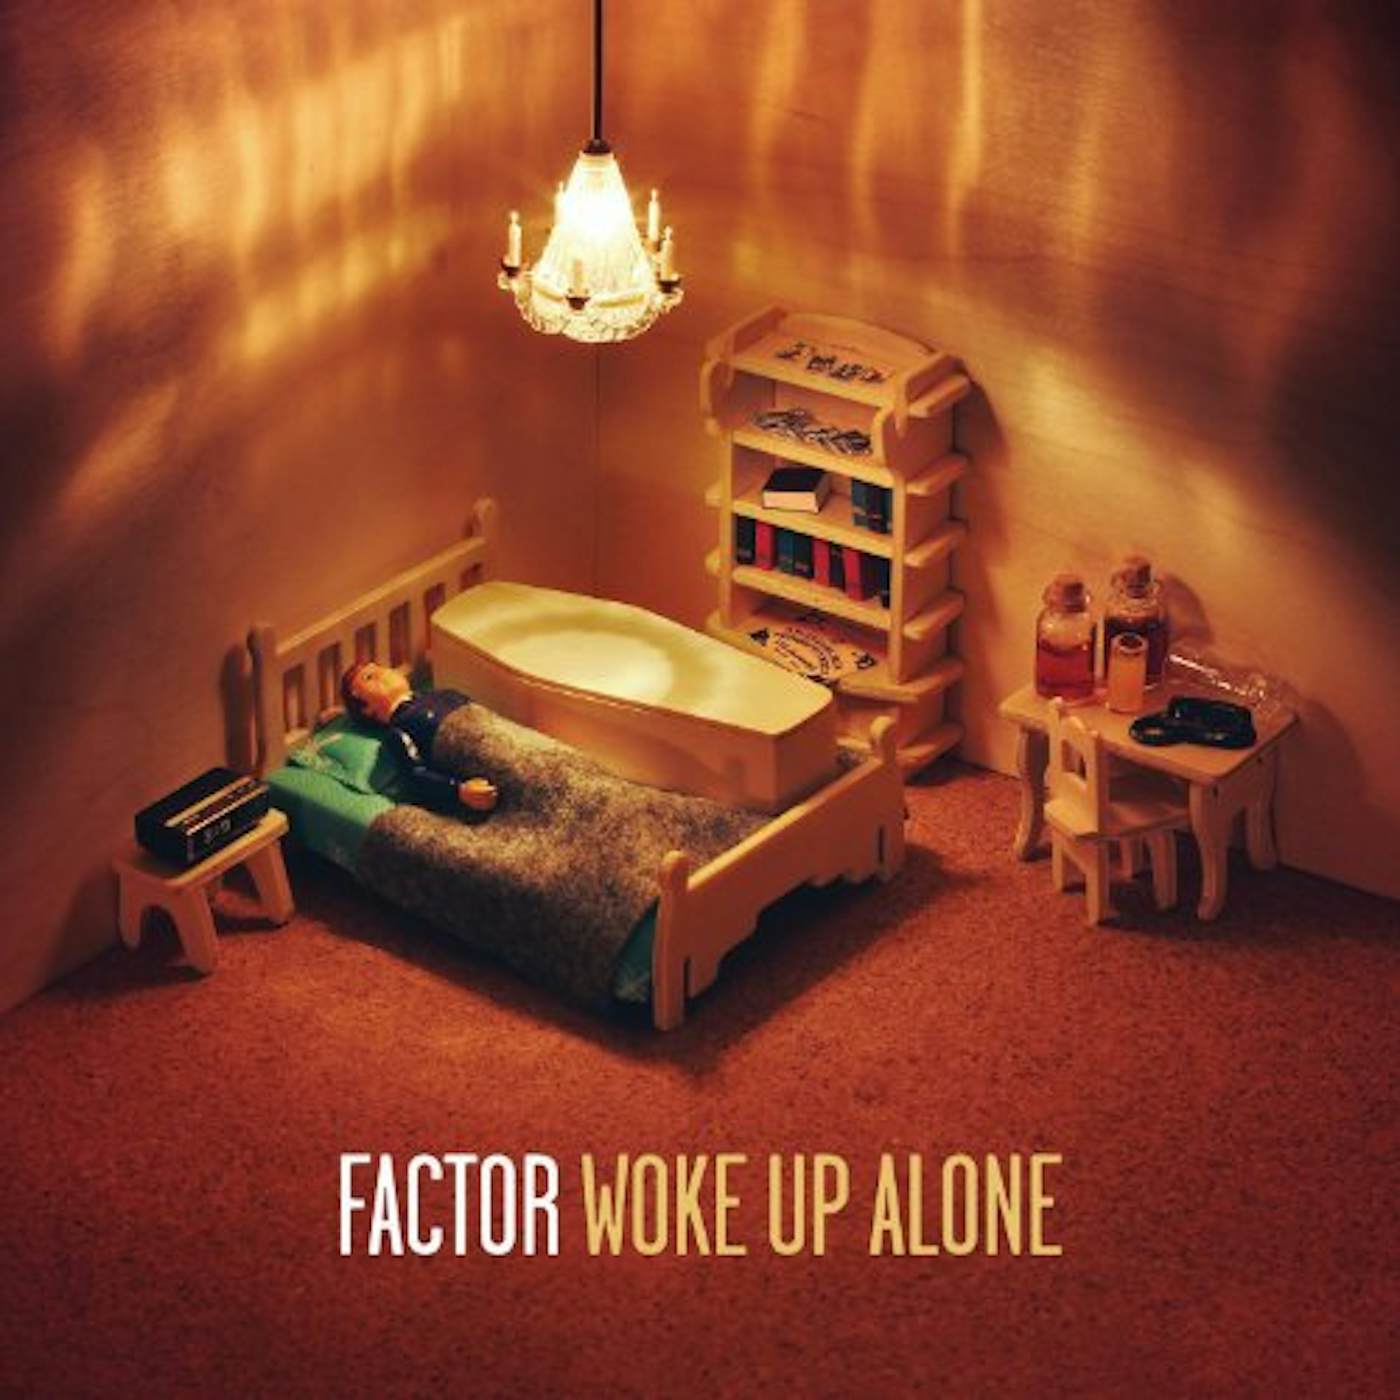 Factor Woke Up Alone Vinyl Record